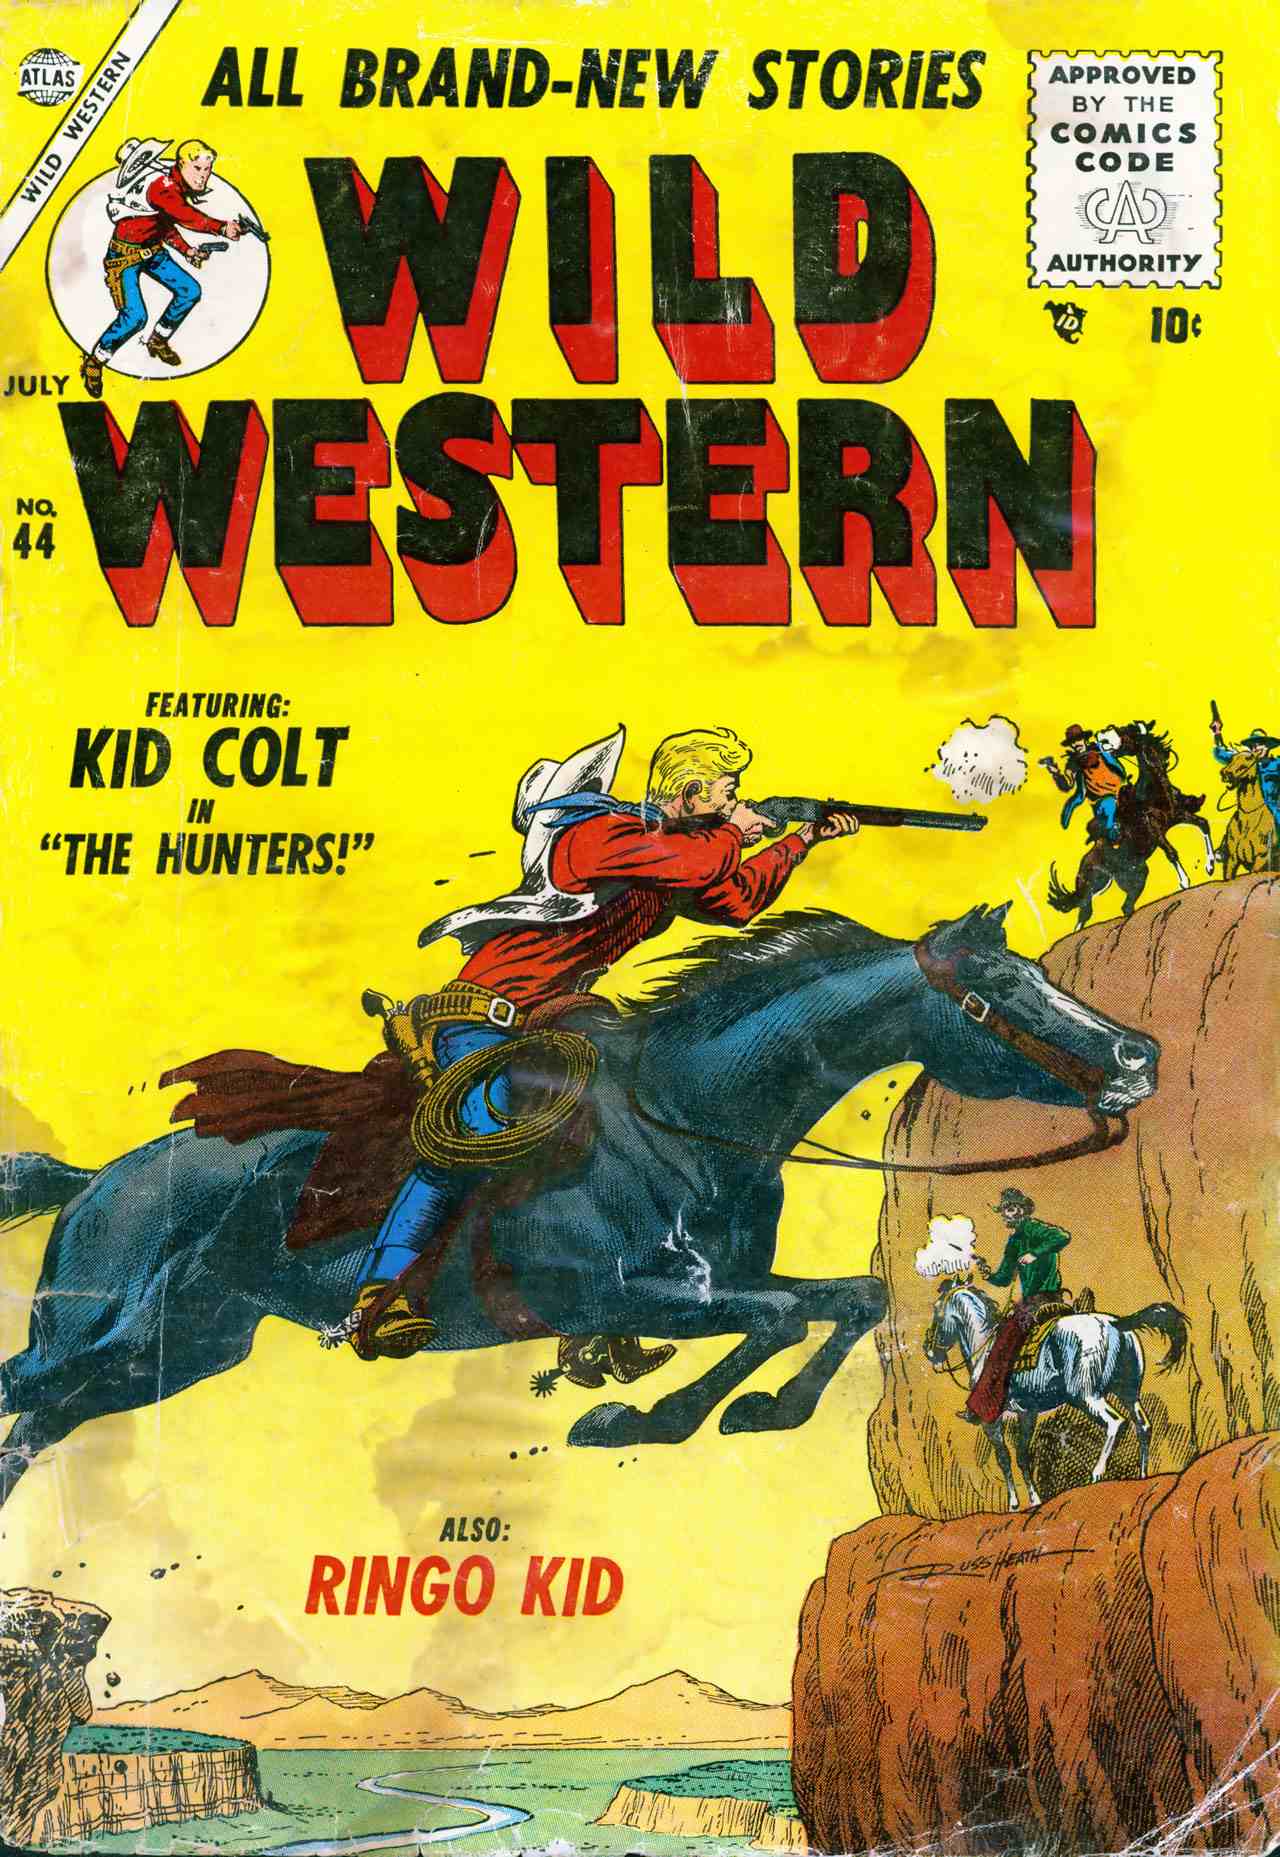 Read online Wild Western comic -  Issue #44 - 1